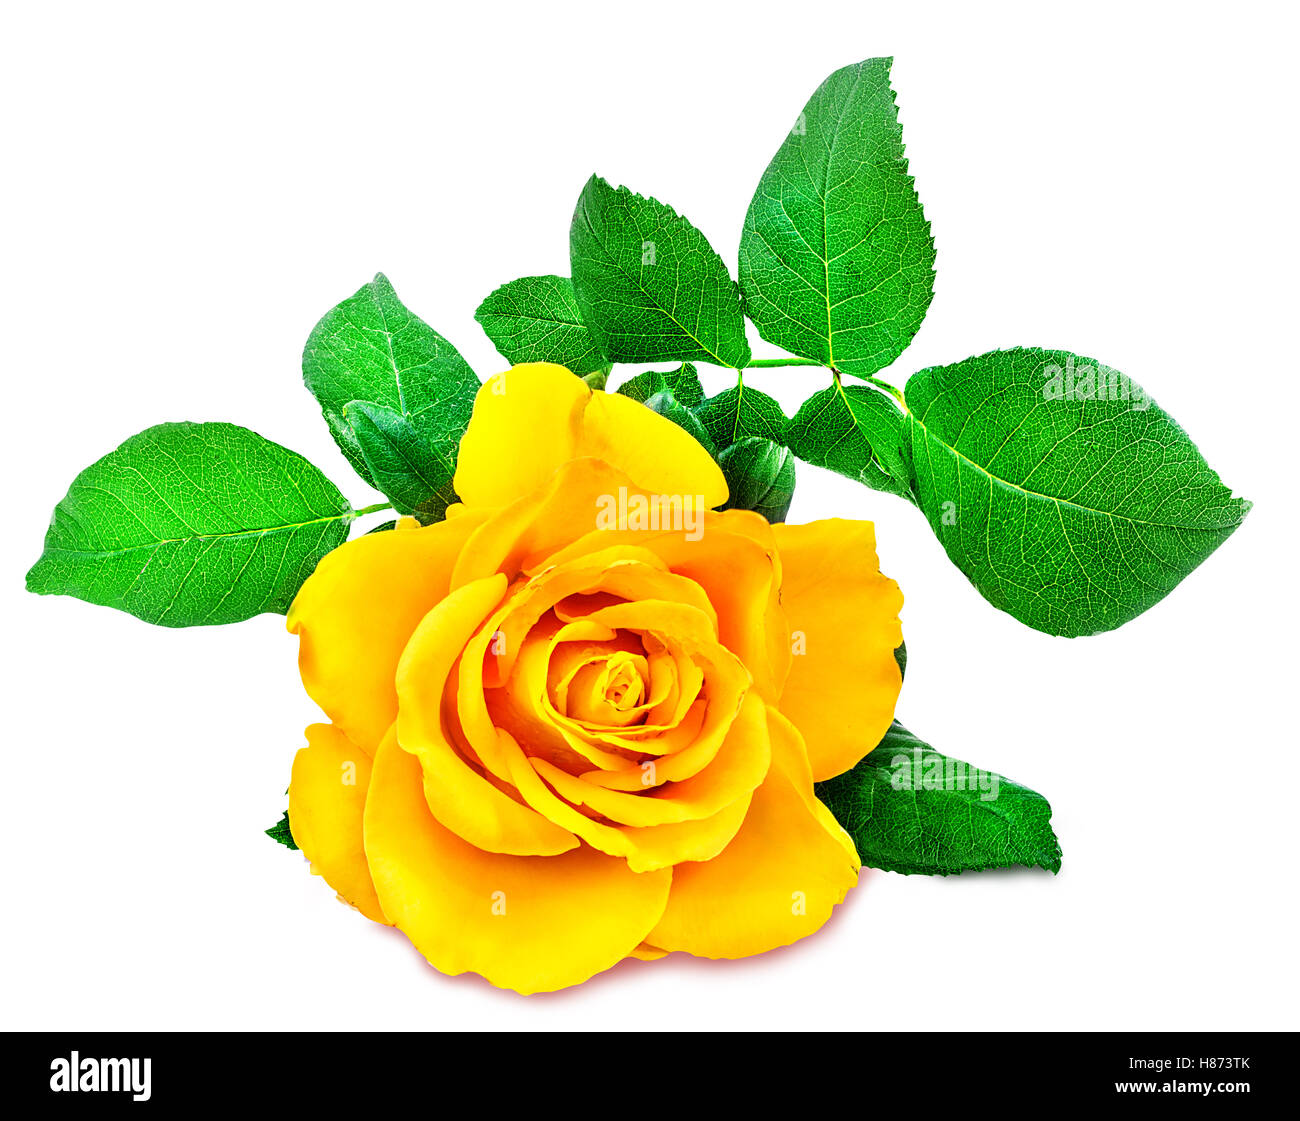 rose isolated on the white background Stock Photo